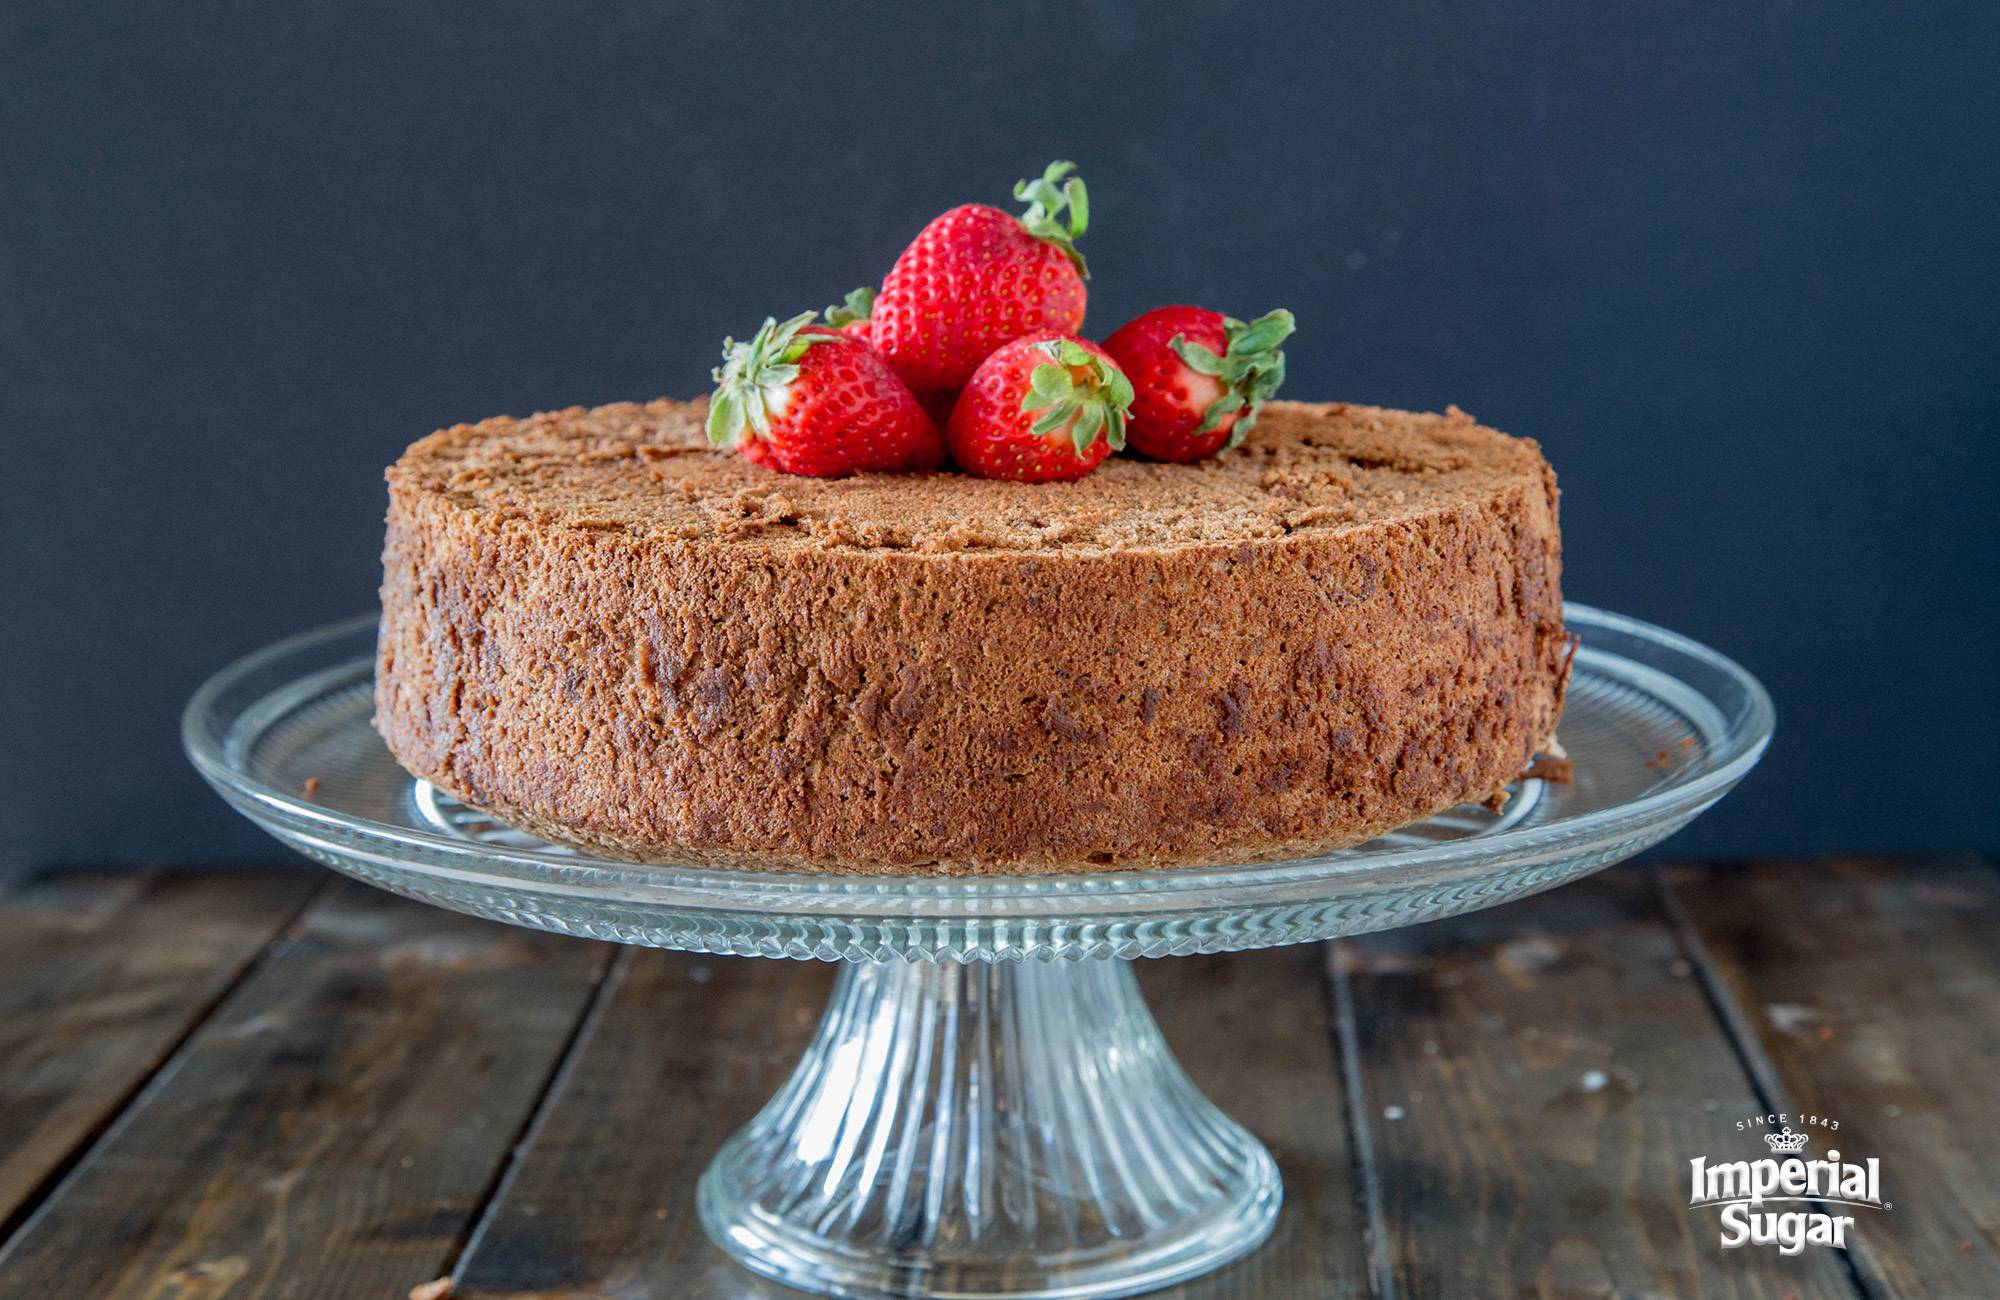 Chocolate Angel Food Cake with Strawberries Recipe - (4.7/5)